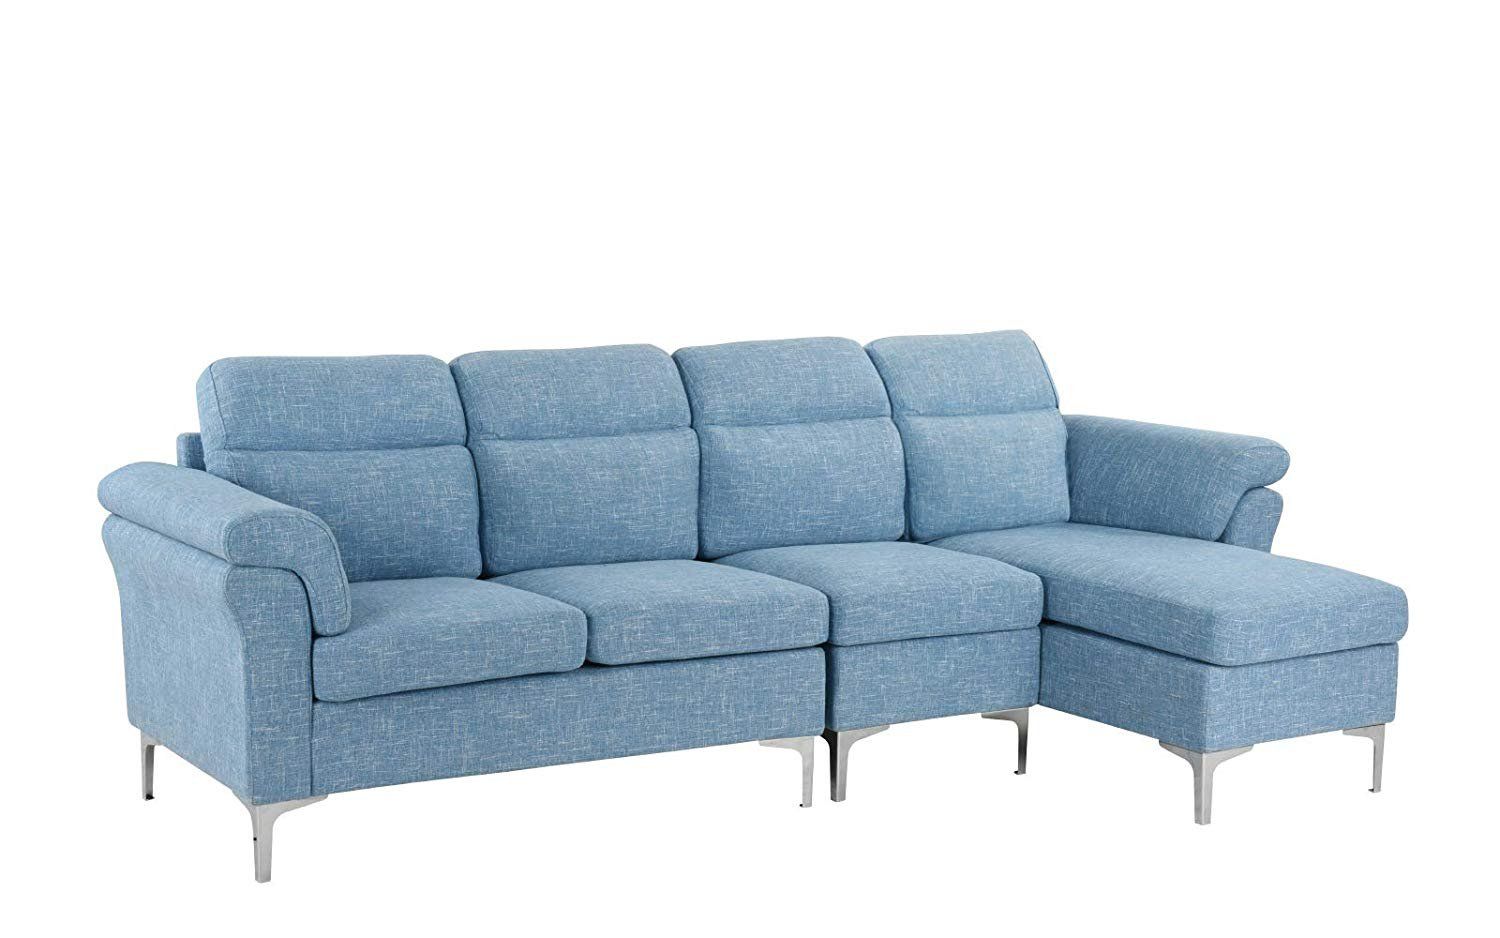 Modern Linen Fabric Large Sectional Sofa, L Shape Couch 4 Seater, Light Regarding Modern Blue Linen Sofas (Gallery 7 of 20)